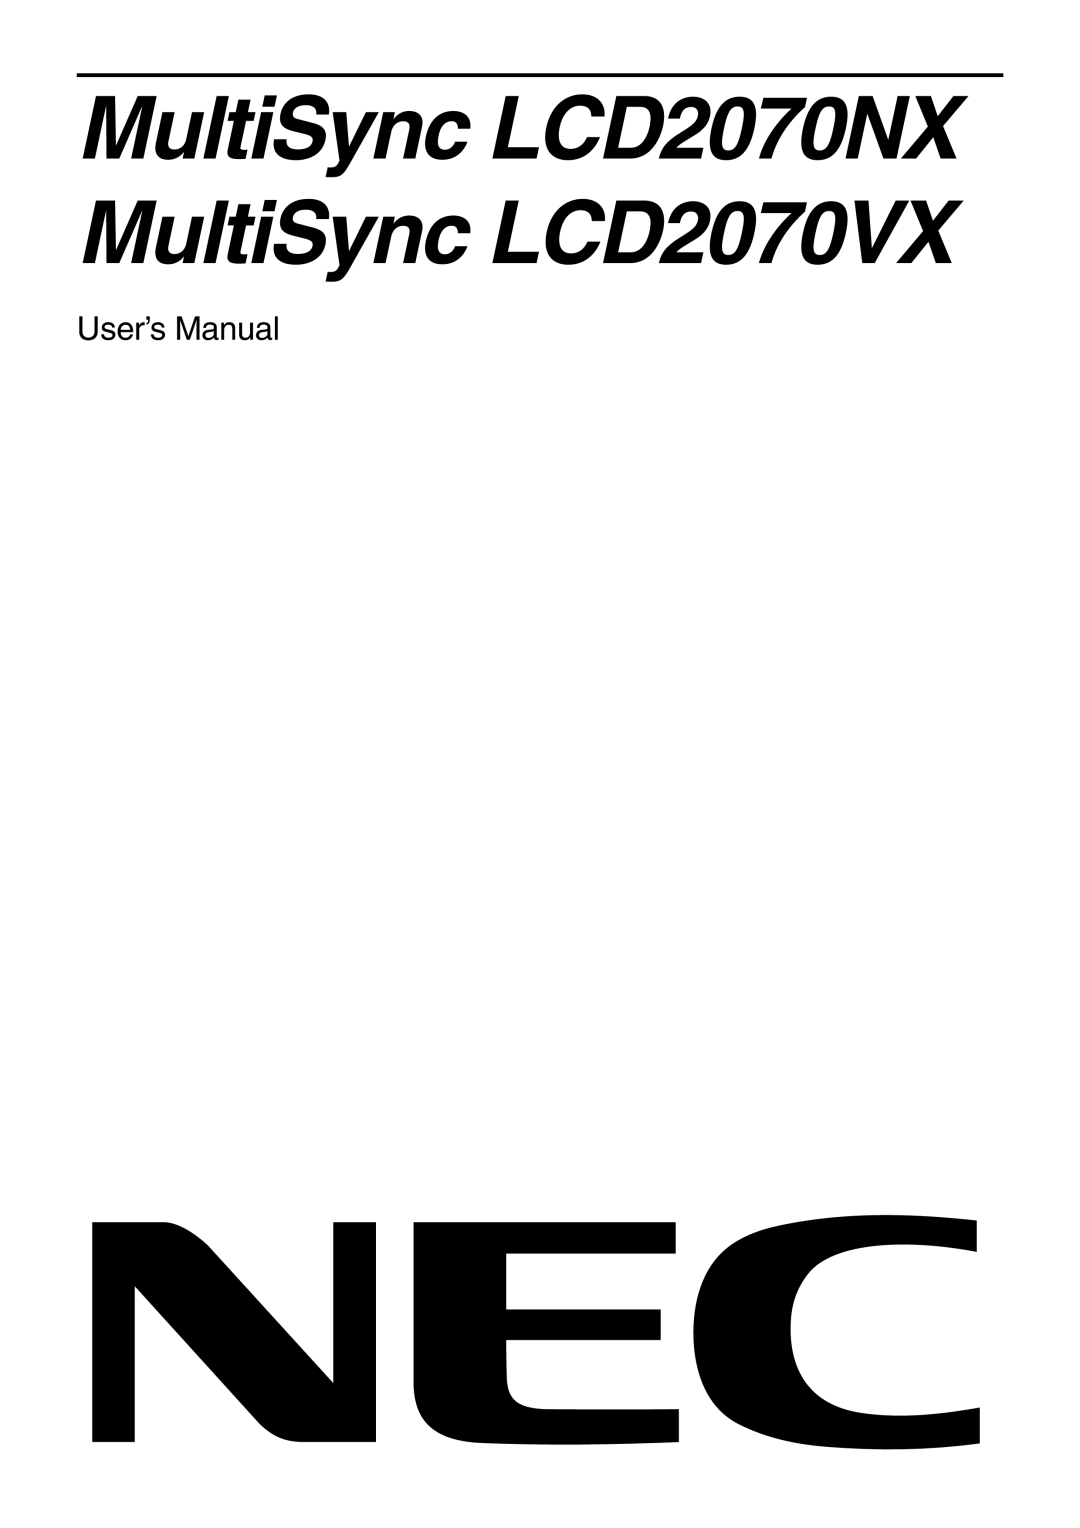 NEC LCD2070NX manual NEC MultiSync 70 Series, 15 - 24 thin-frameLCDs, ideal for corporate environments, Enterprise Desktop 